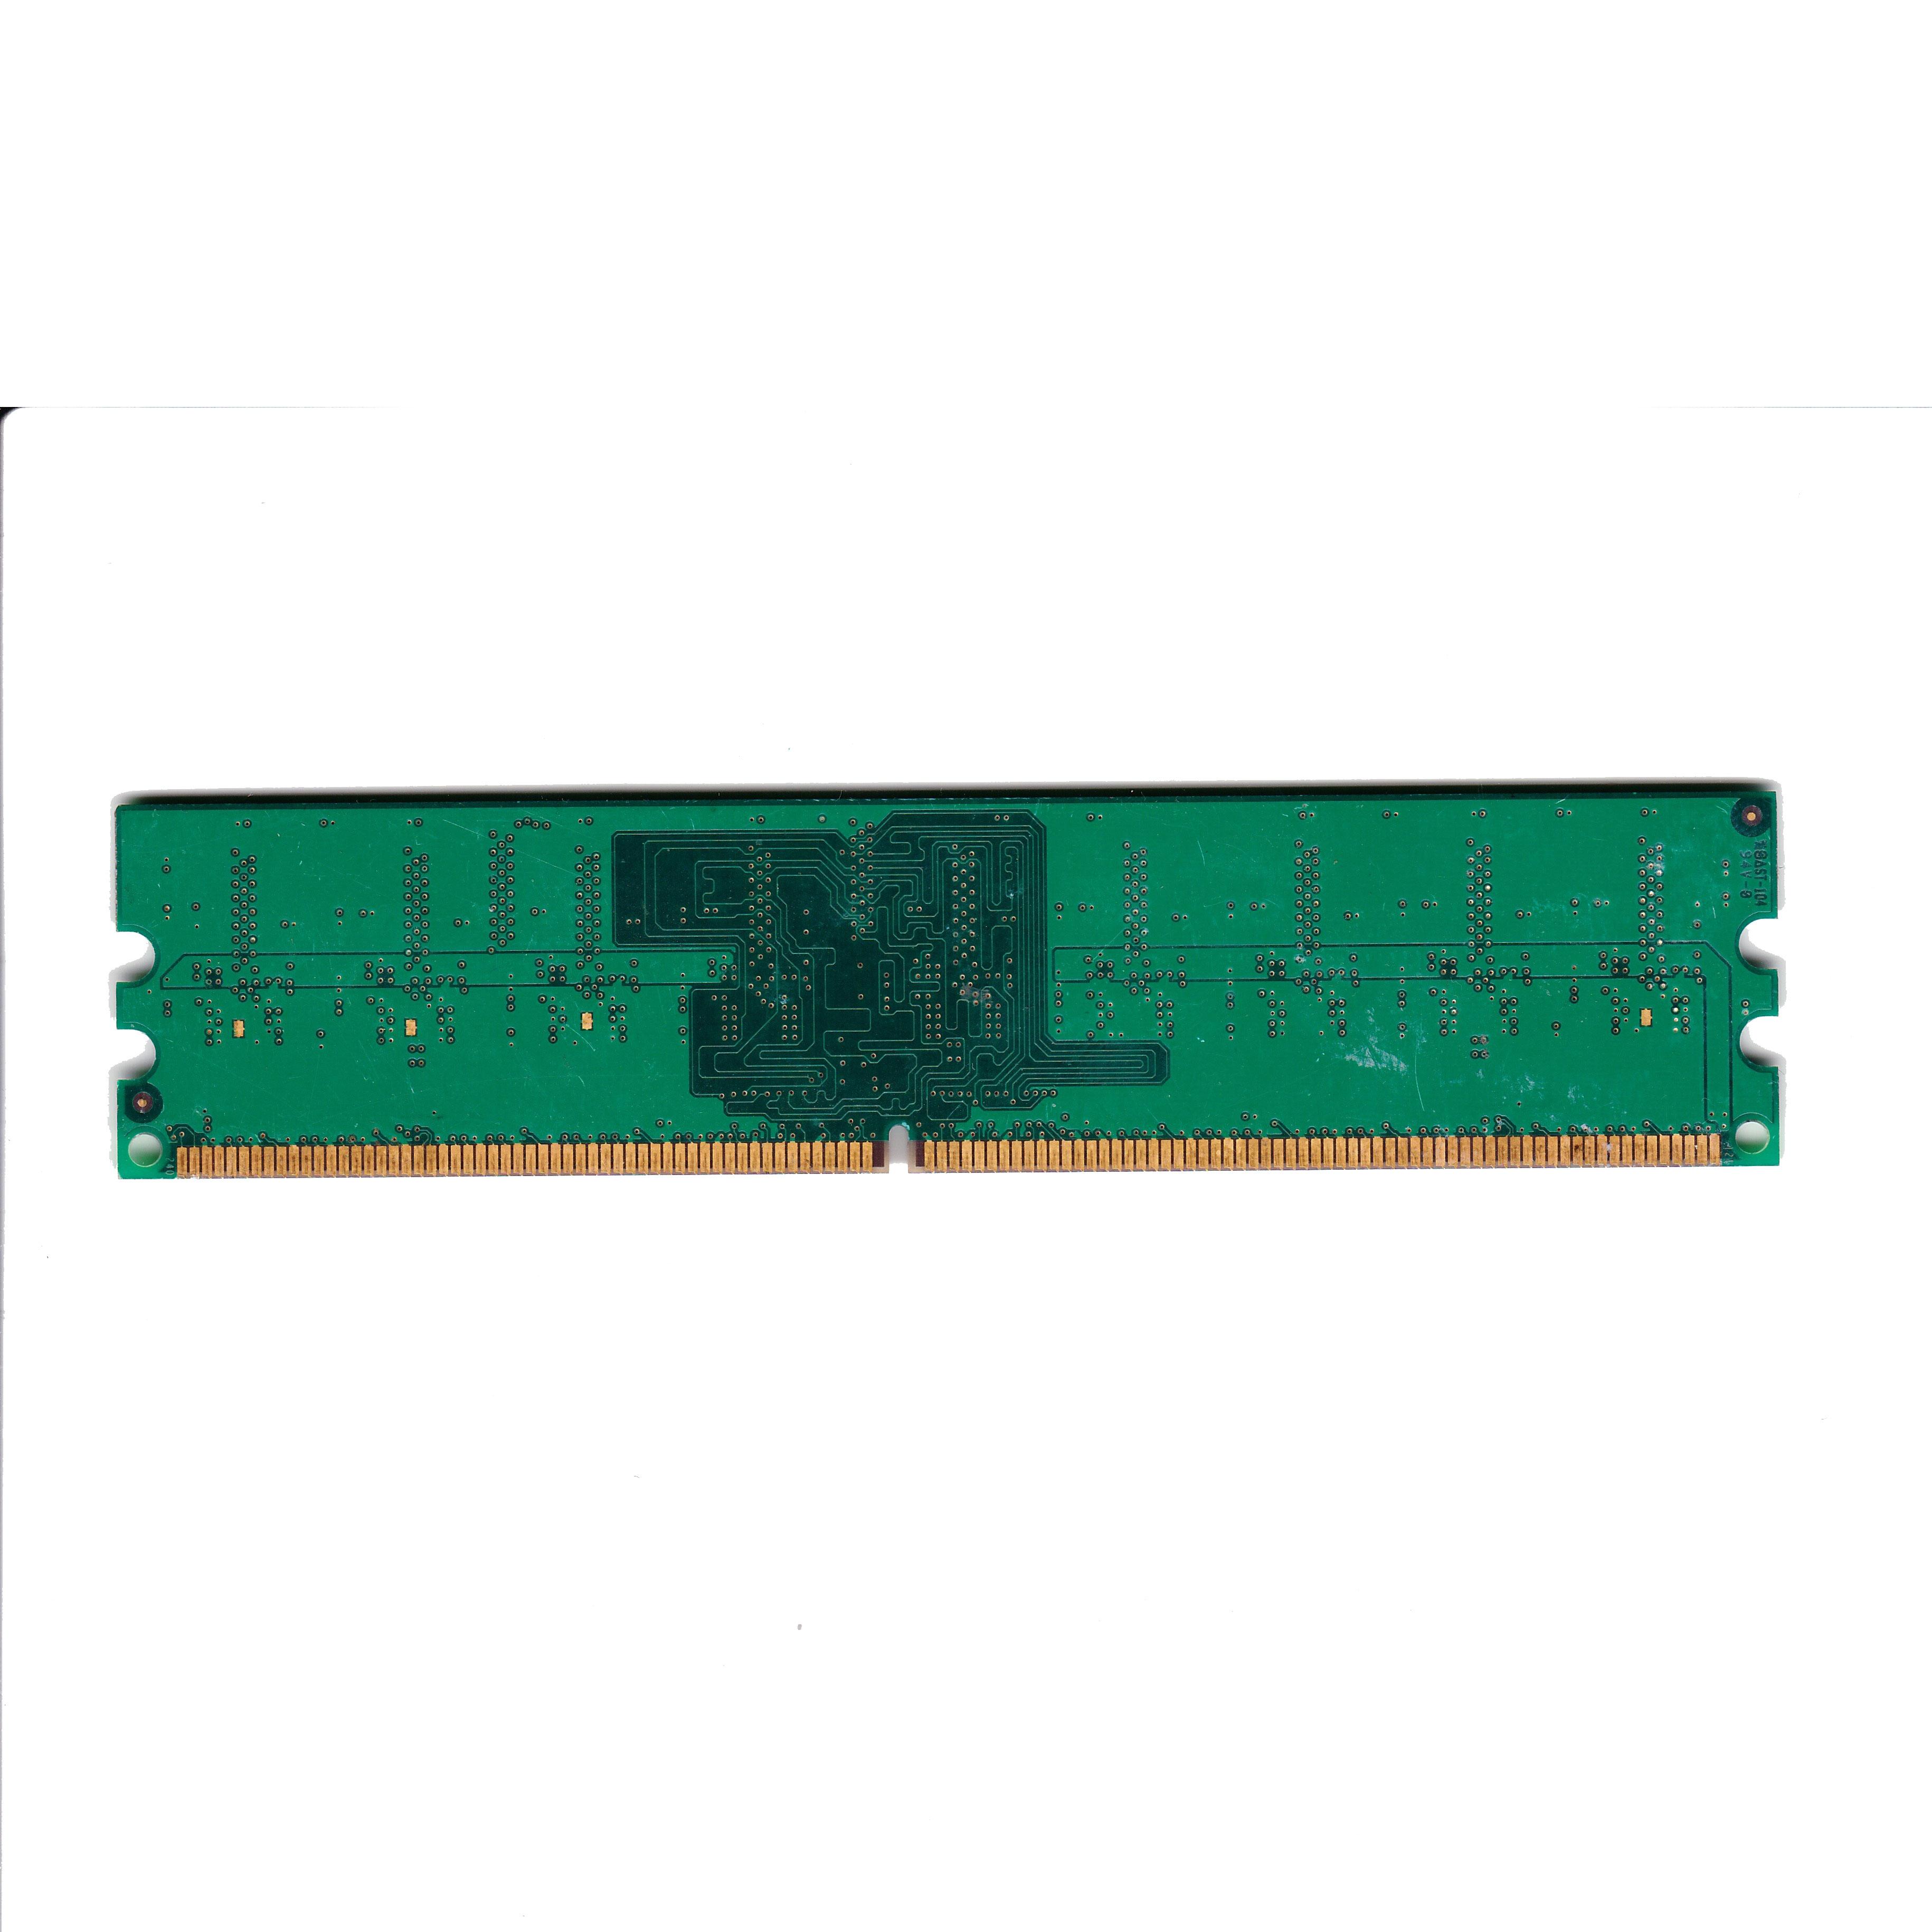 Preowned SAMSUNG 256MB DDR RAM 3200U 333MHz 1Ex8 P2 Untested x1